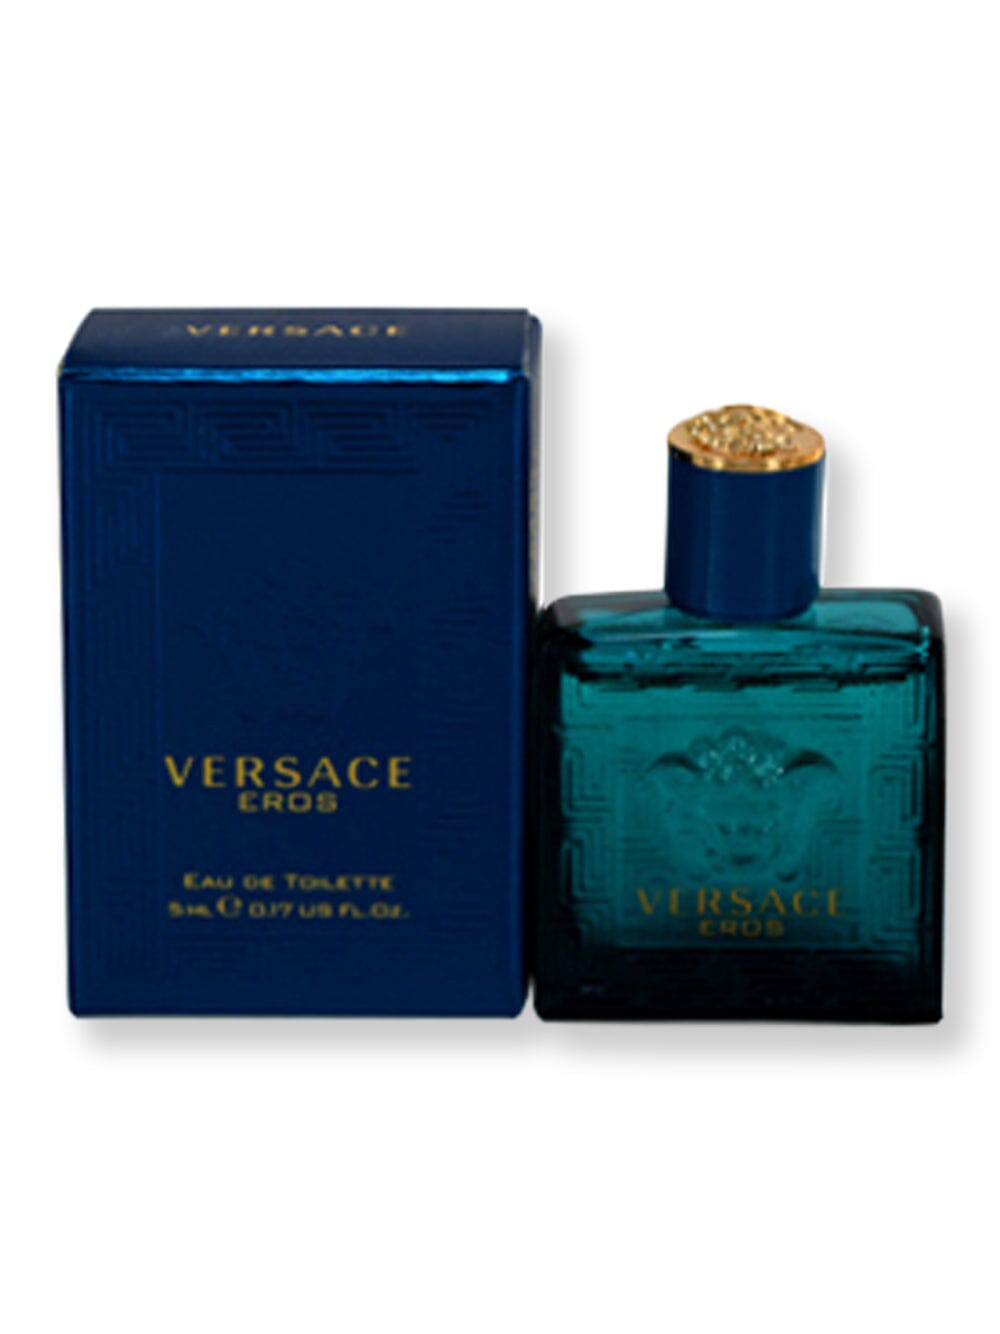 Versace Versace Eros EDT 0.17 oz5 ml Perfume 